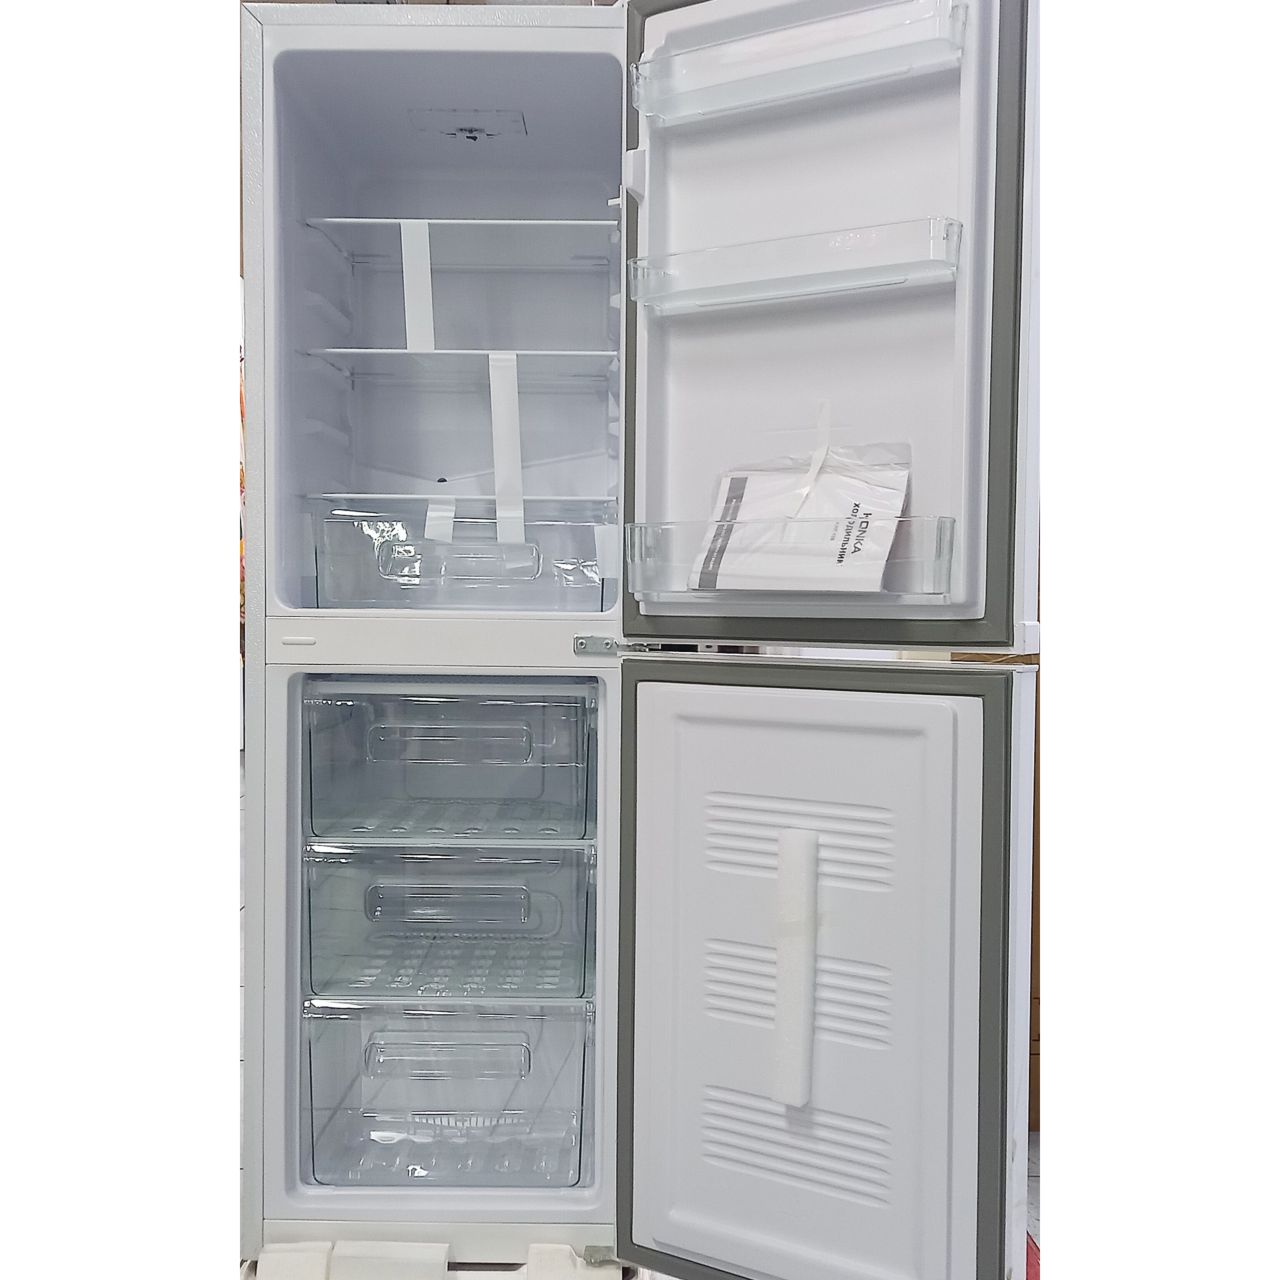 Холодильник двухкамерный Konka 184 литра